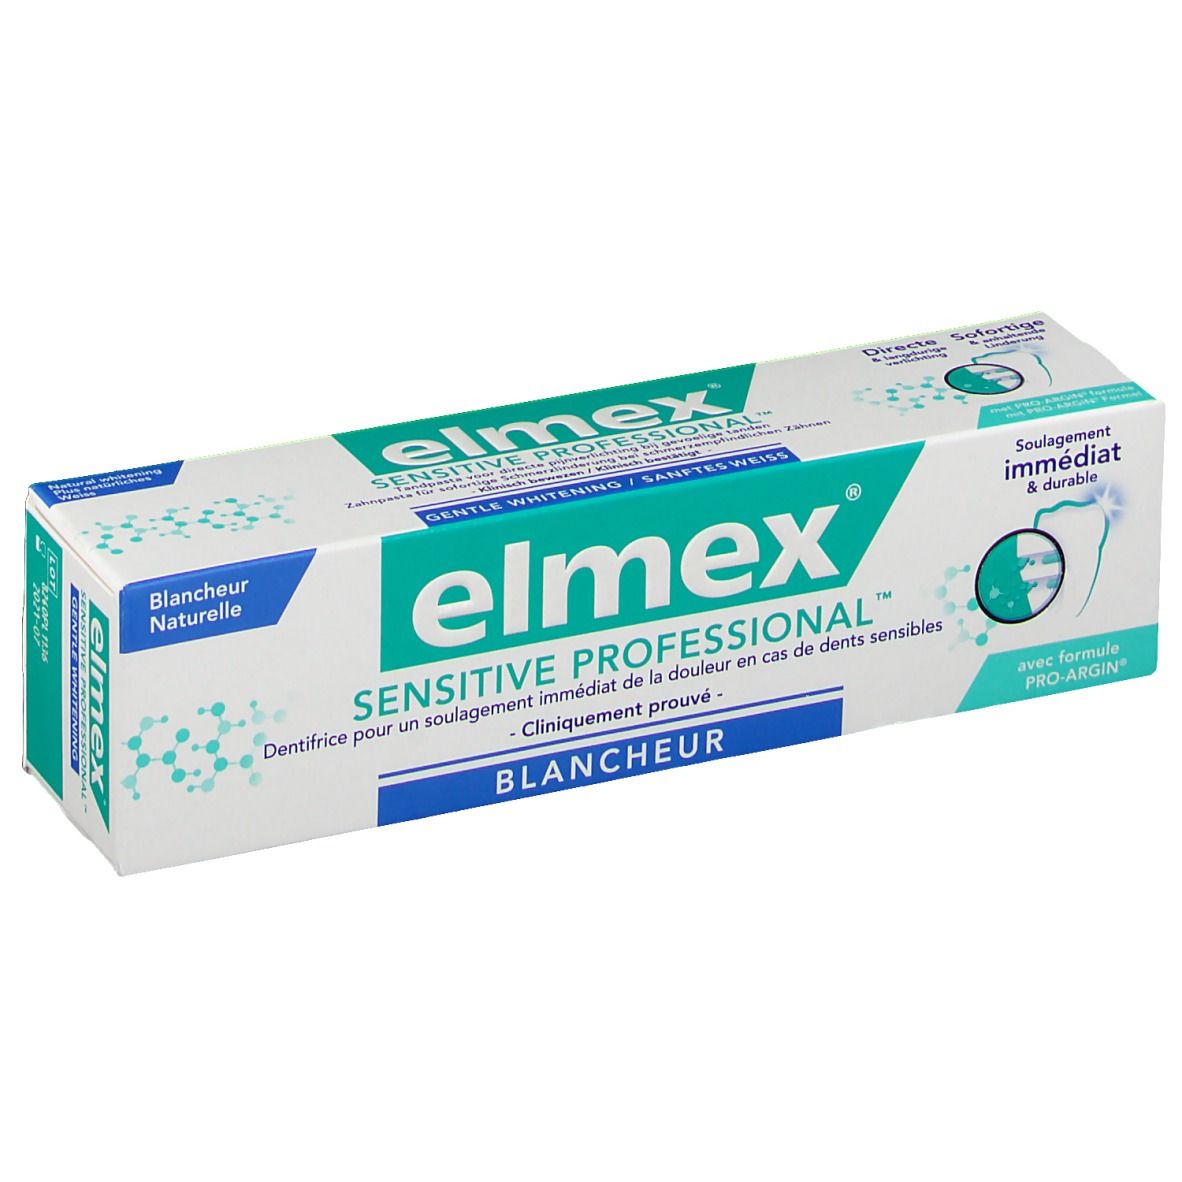 elmex® Sensitive Professional™ Dentifrice blancheur